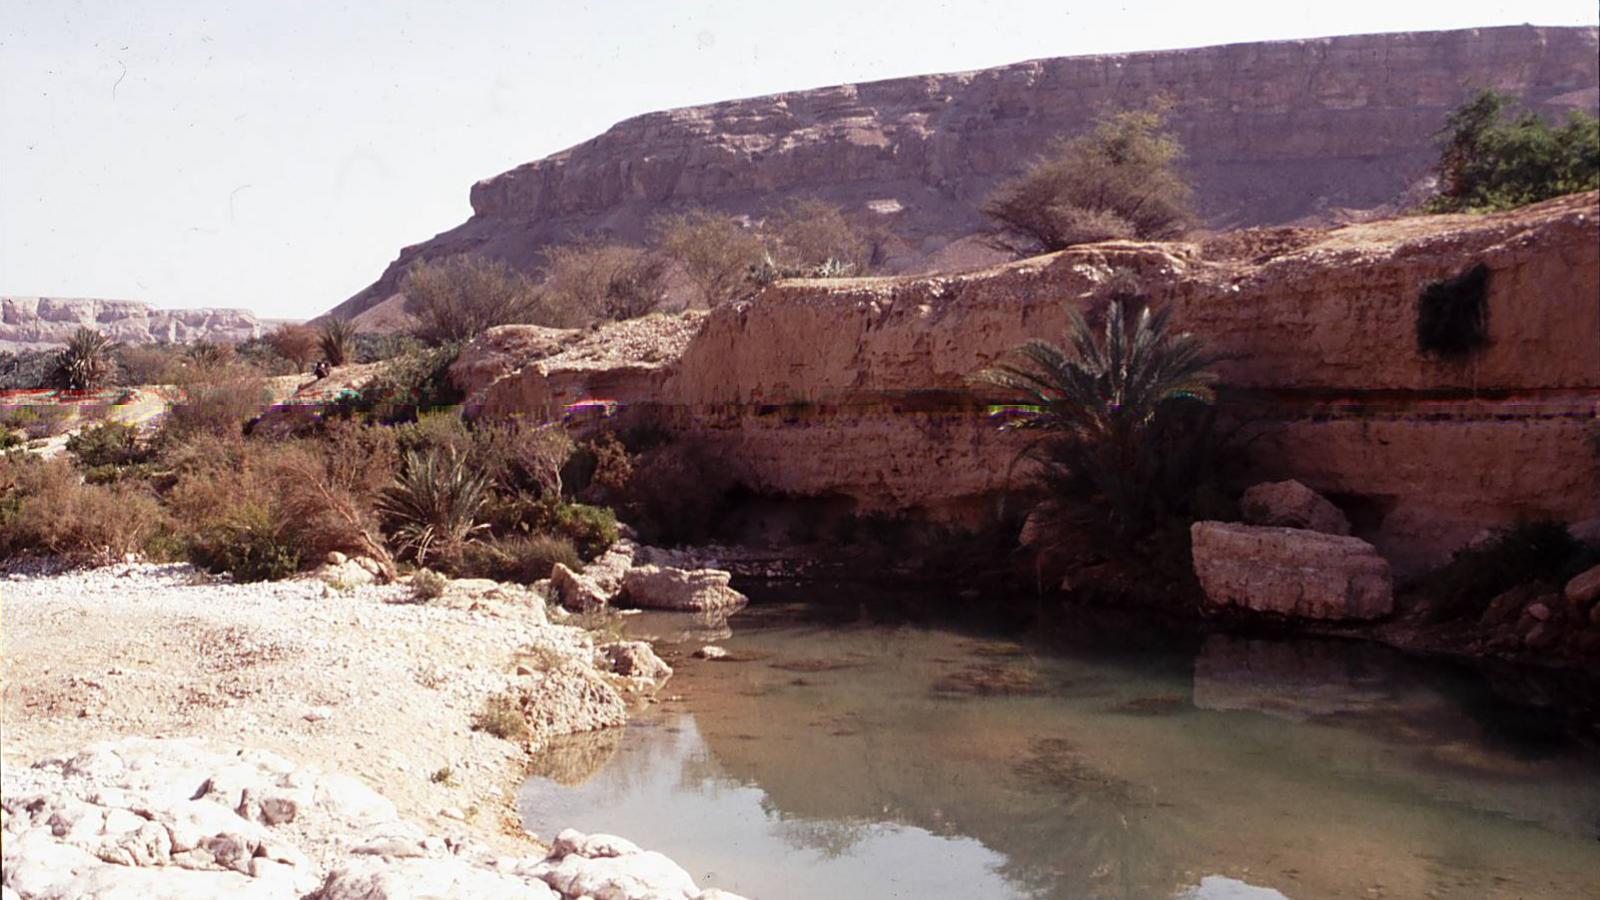 Water pool in the desert